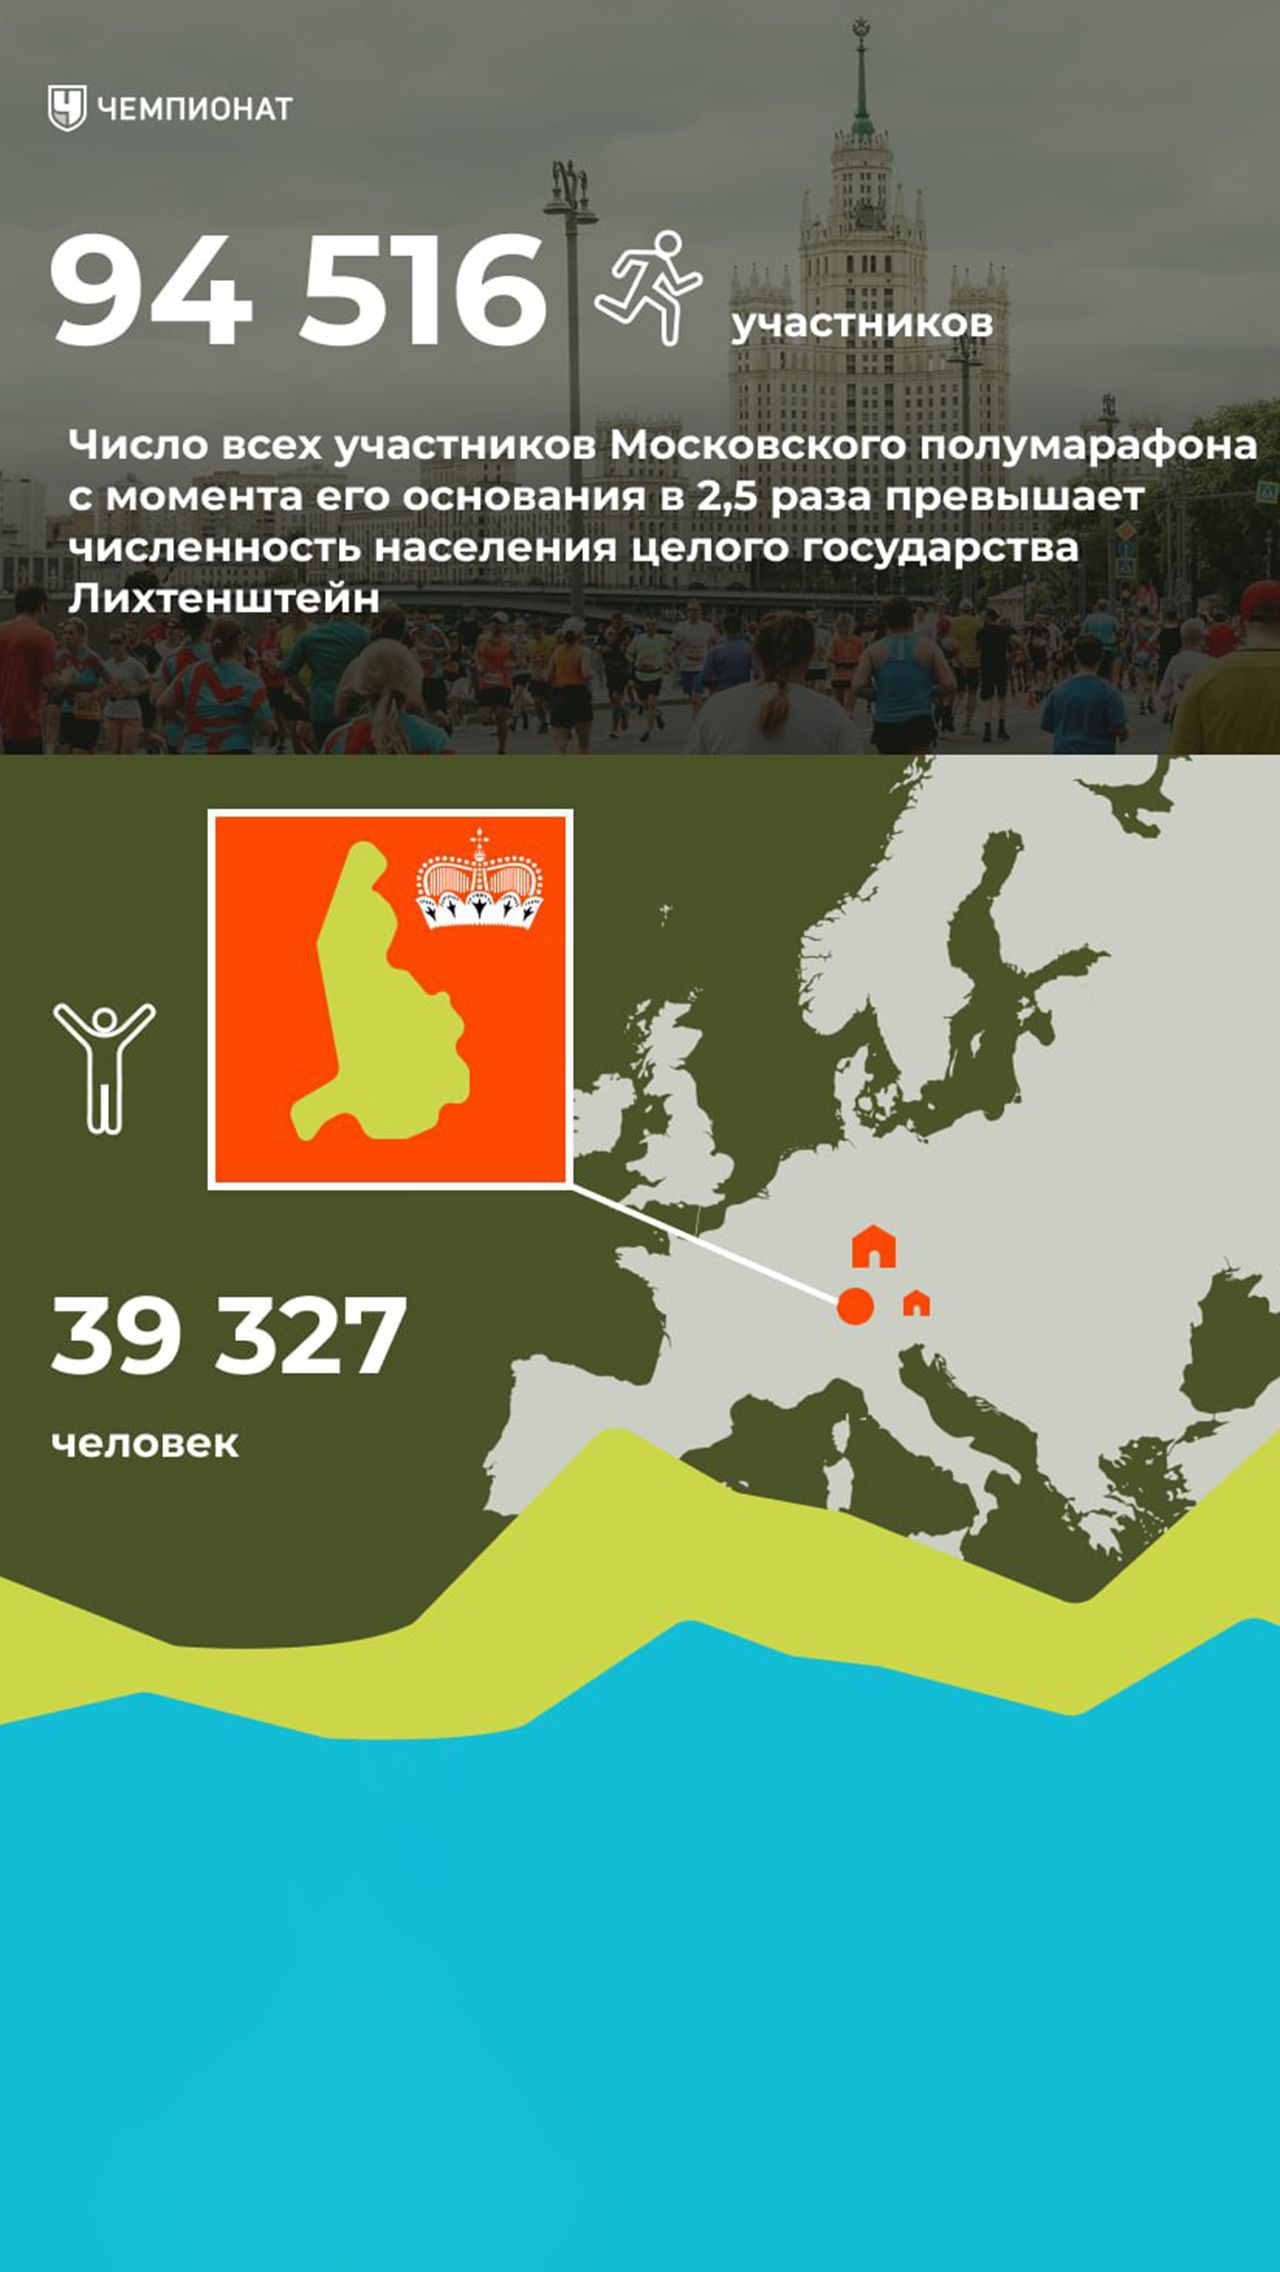 Московский полумарафон в цифрах: участники, дистанции, питание